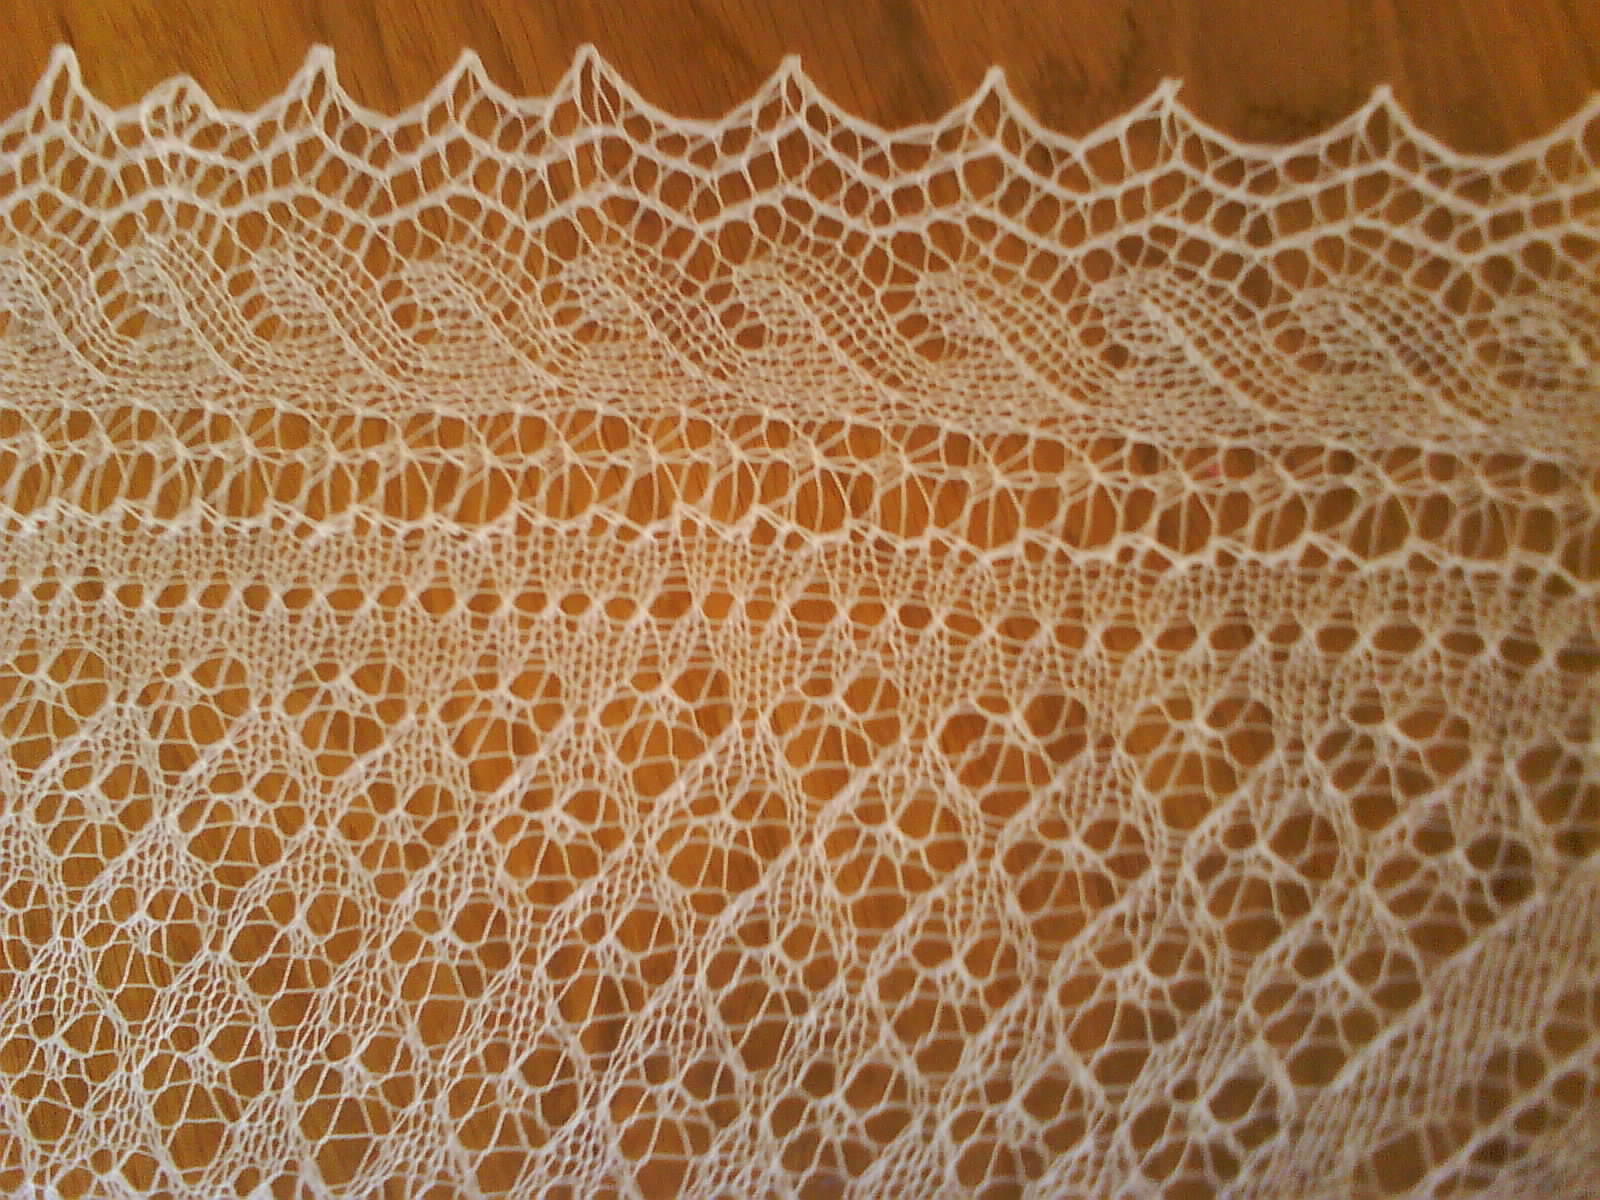 Lace Weight Knitting Yarns - NuMei Yarns - Quality yarn, Wholesa
le